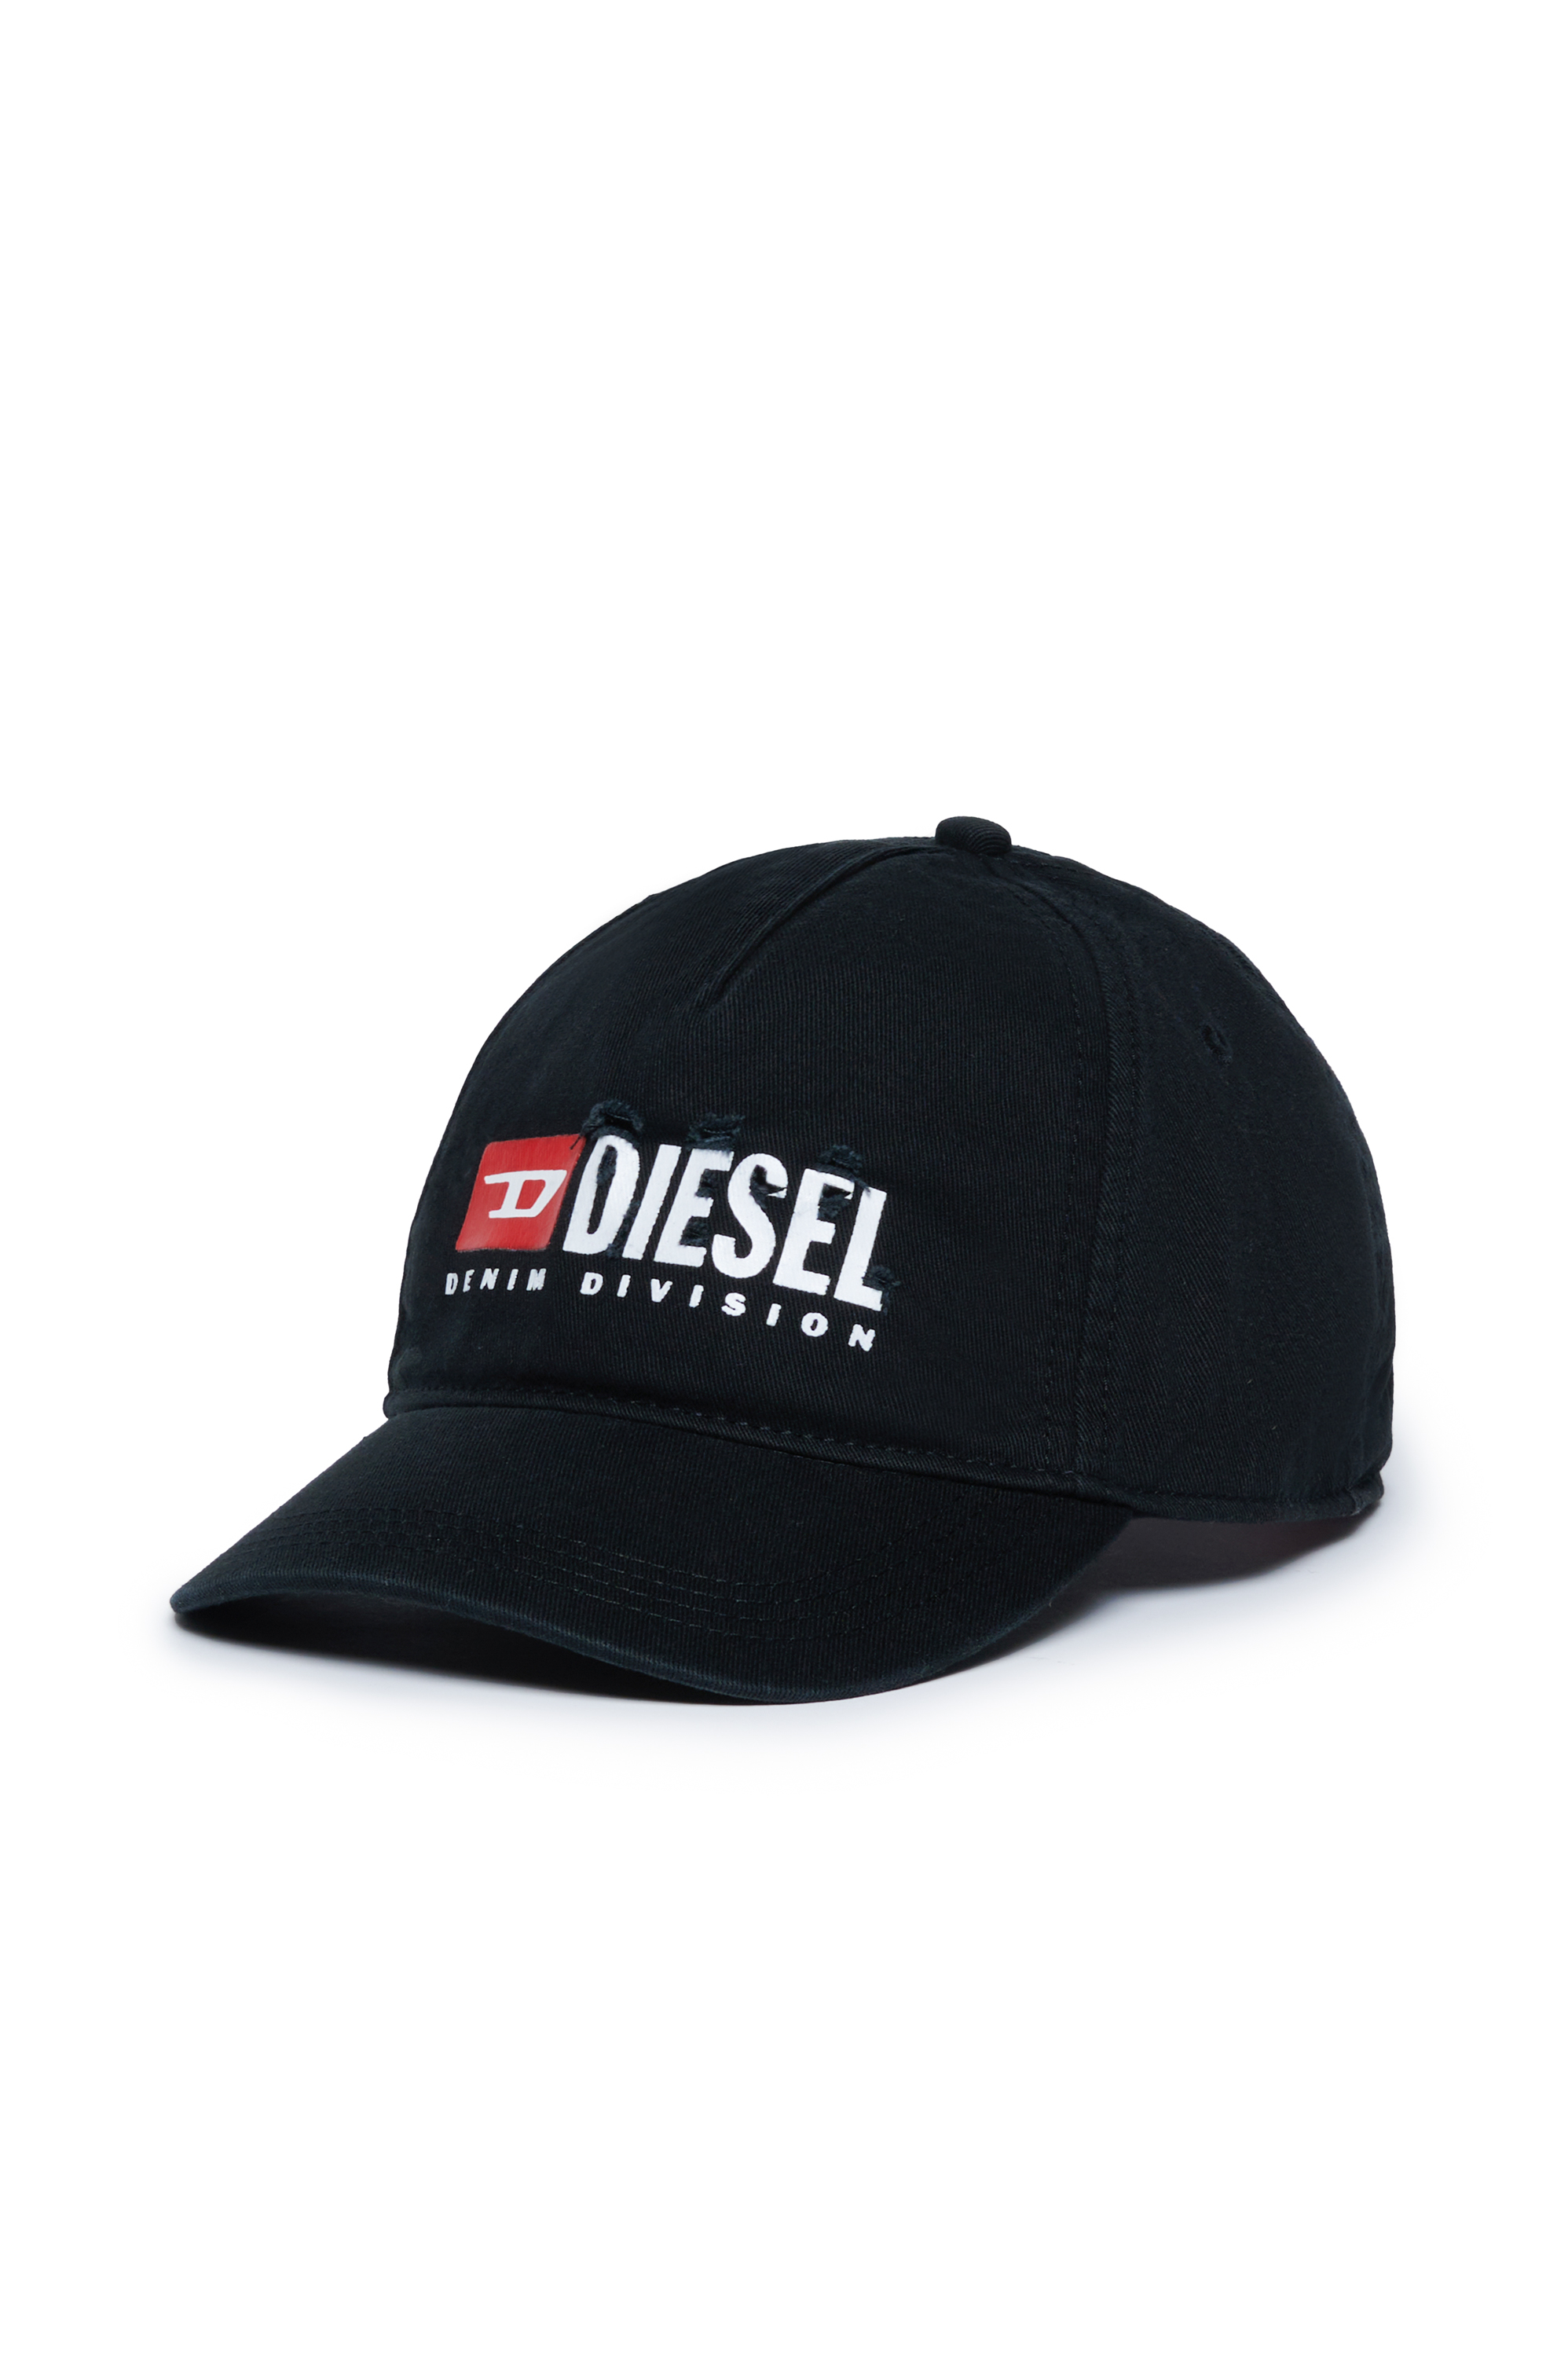 Diesel - FDIVSTROYED, Black - Image 1